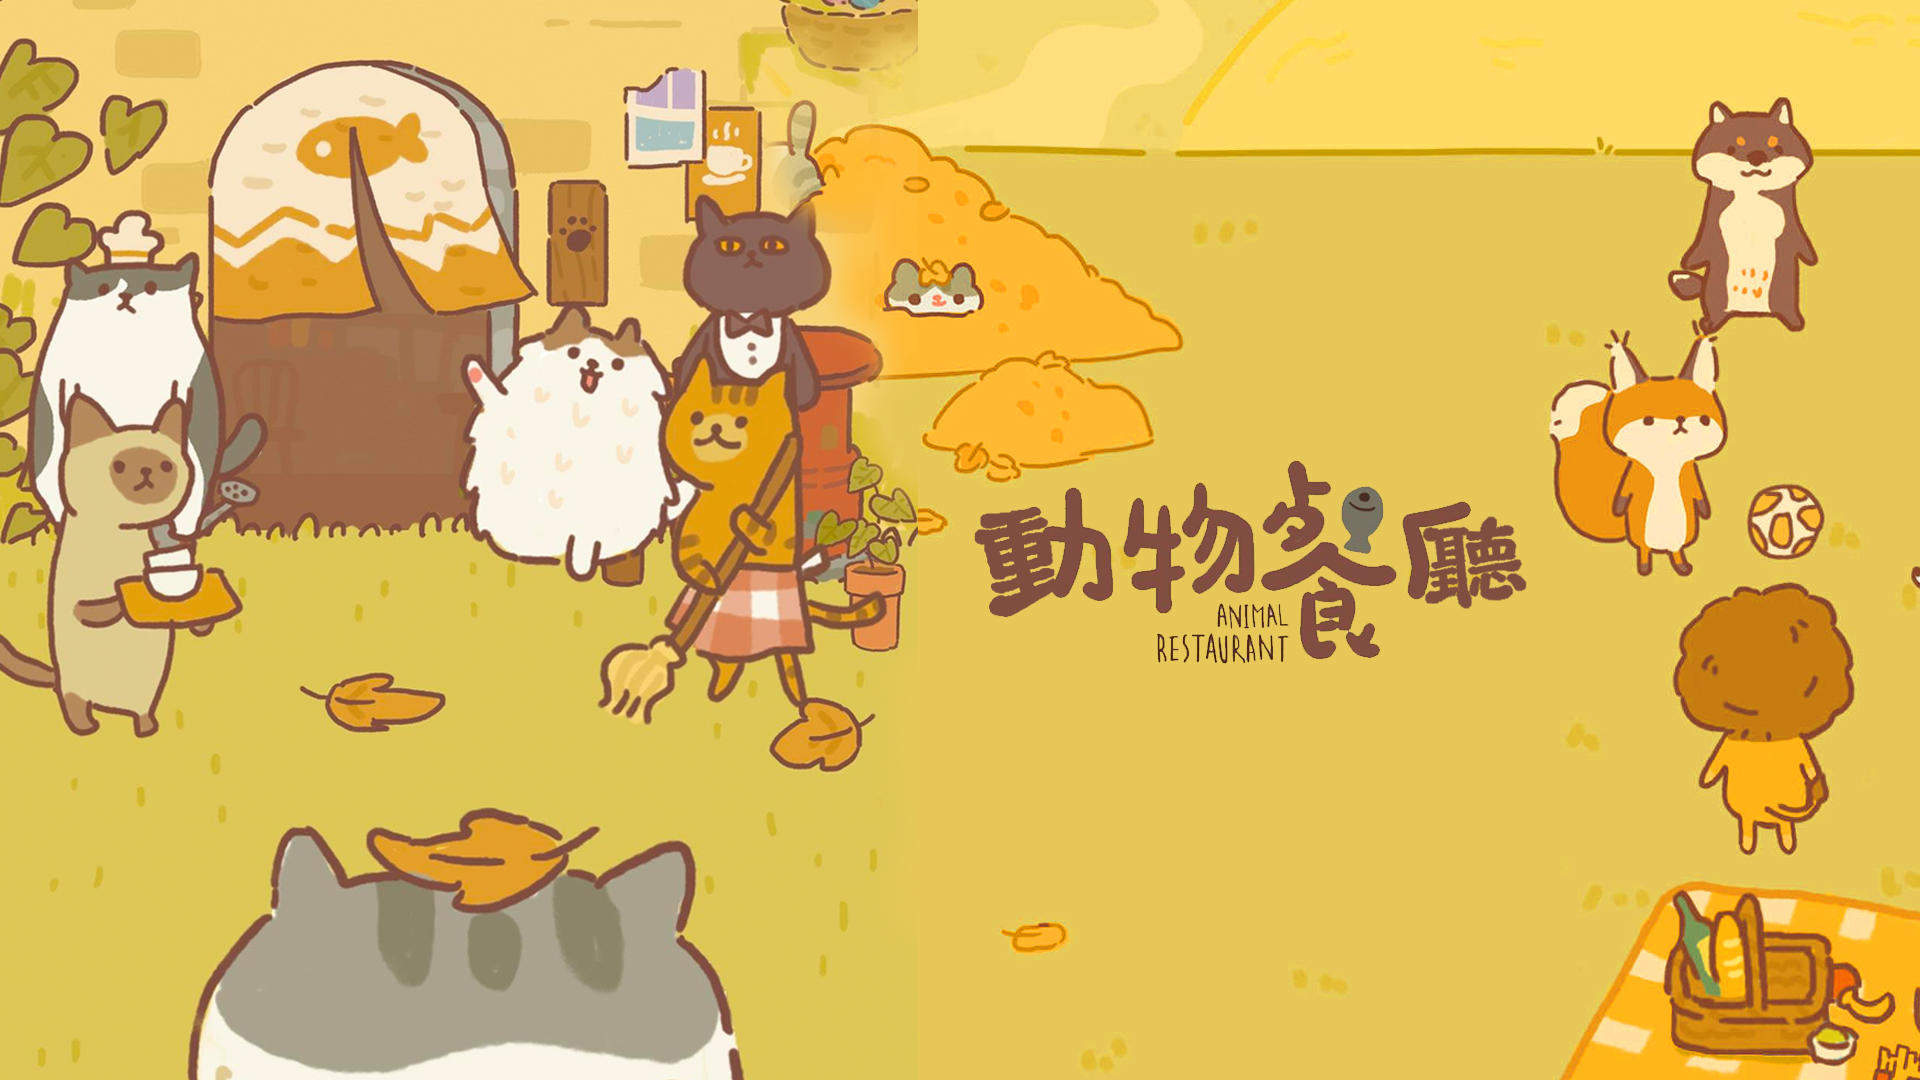 Banner of 動物餐廳 - Animal Restaurant 11.15